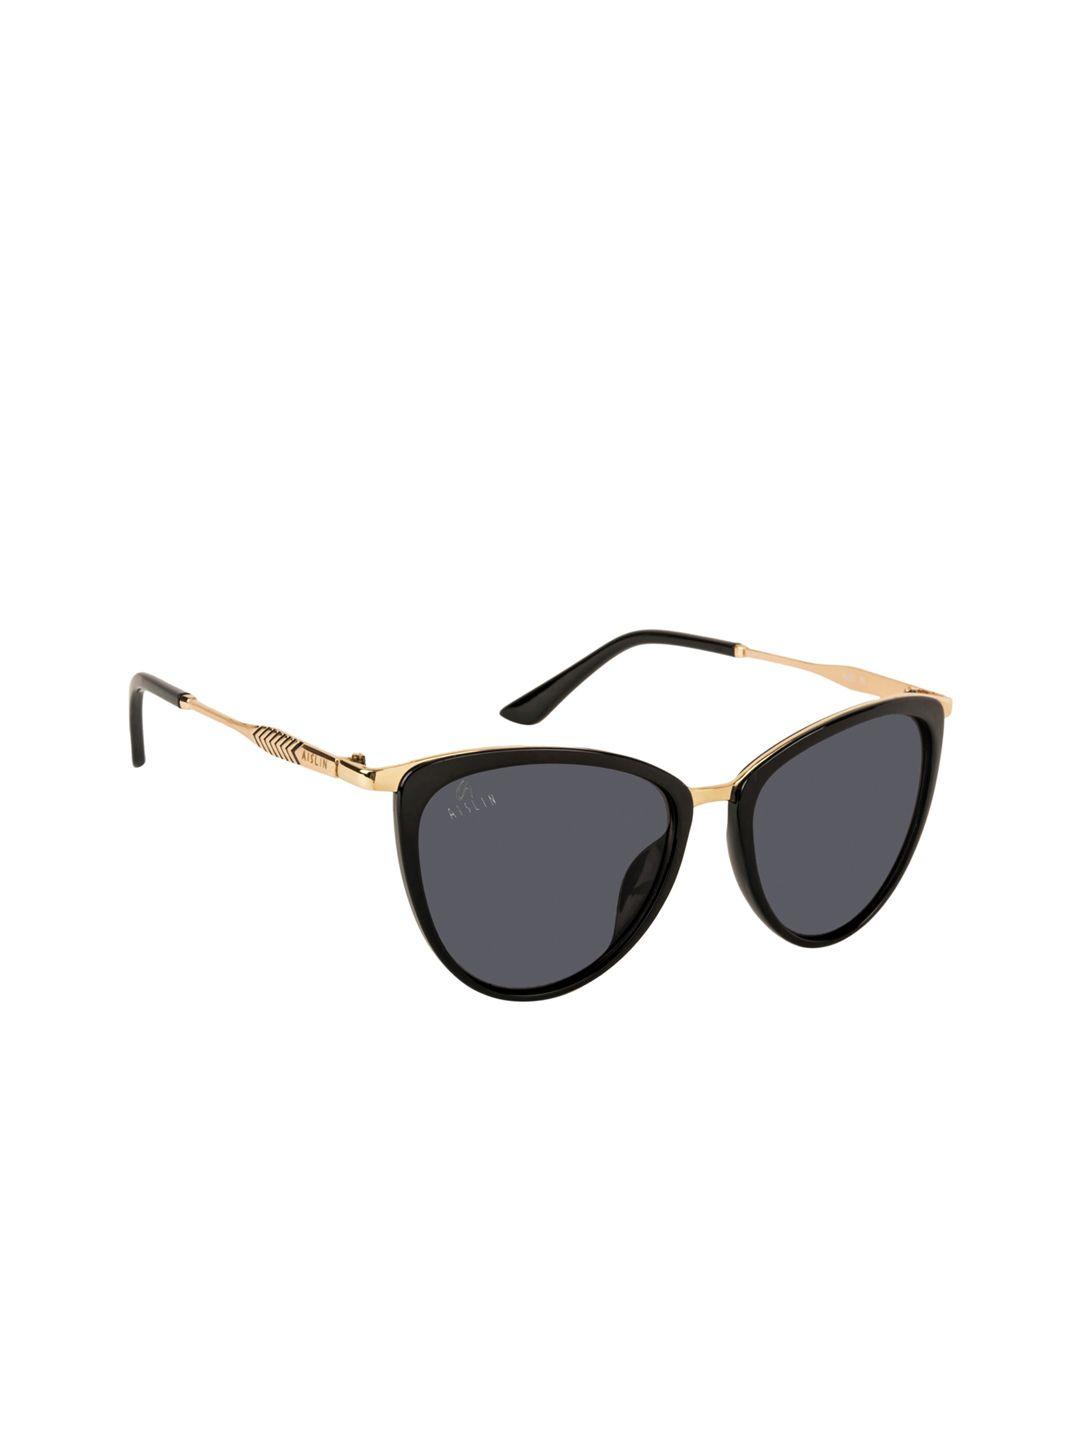 aislin-women-black-uv-protected-cateye-sunglasses-es_12953-82-as-5019-blk-bkgl-ce-59-g